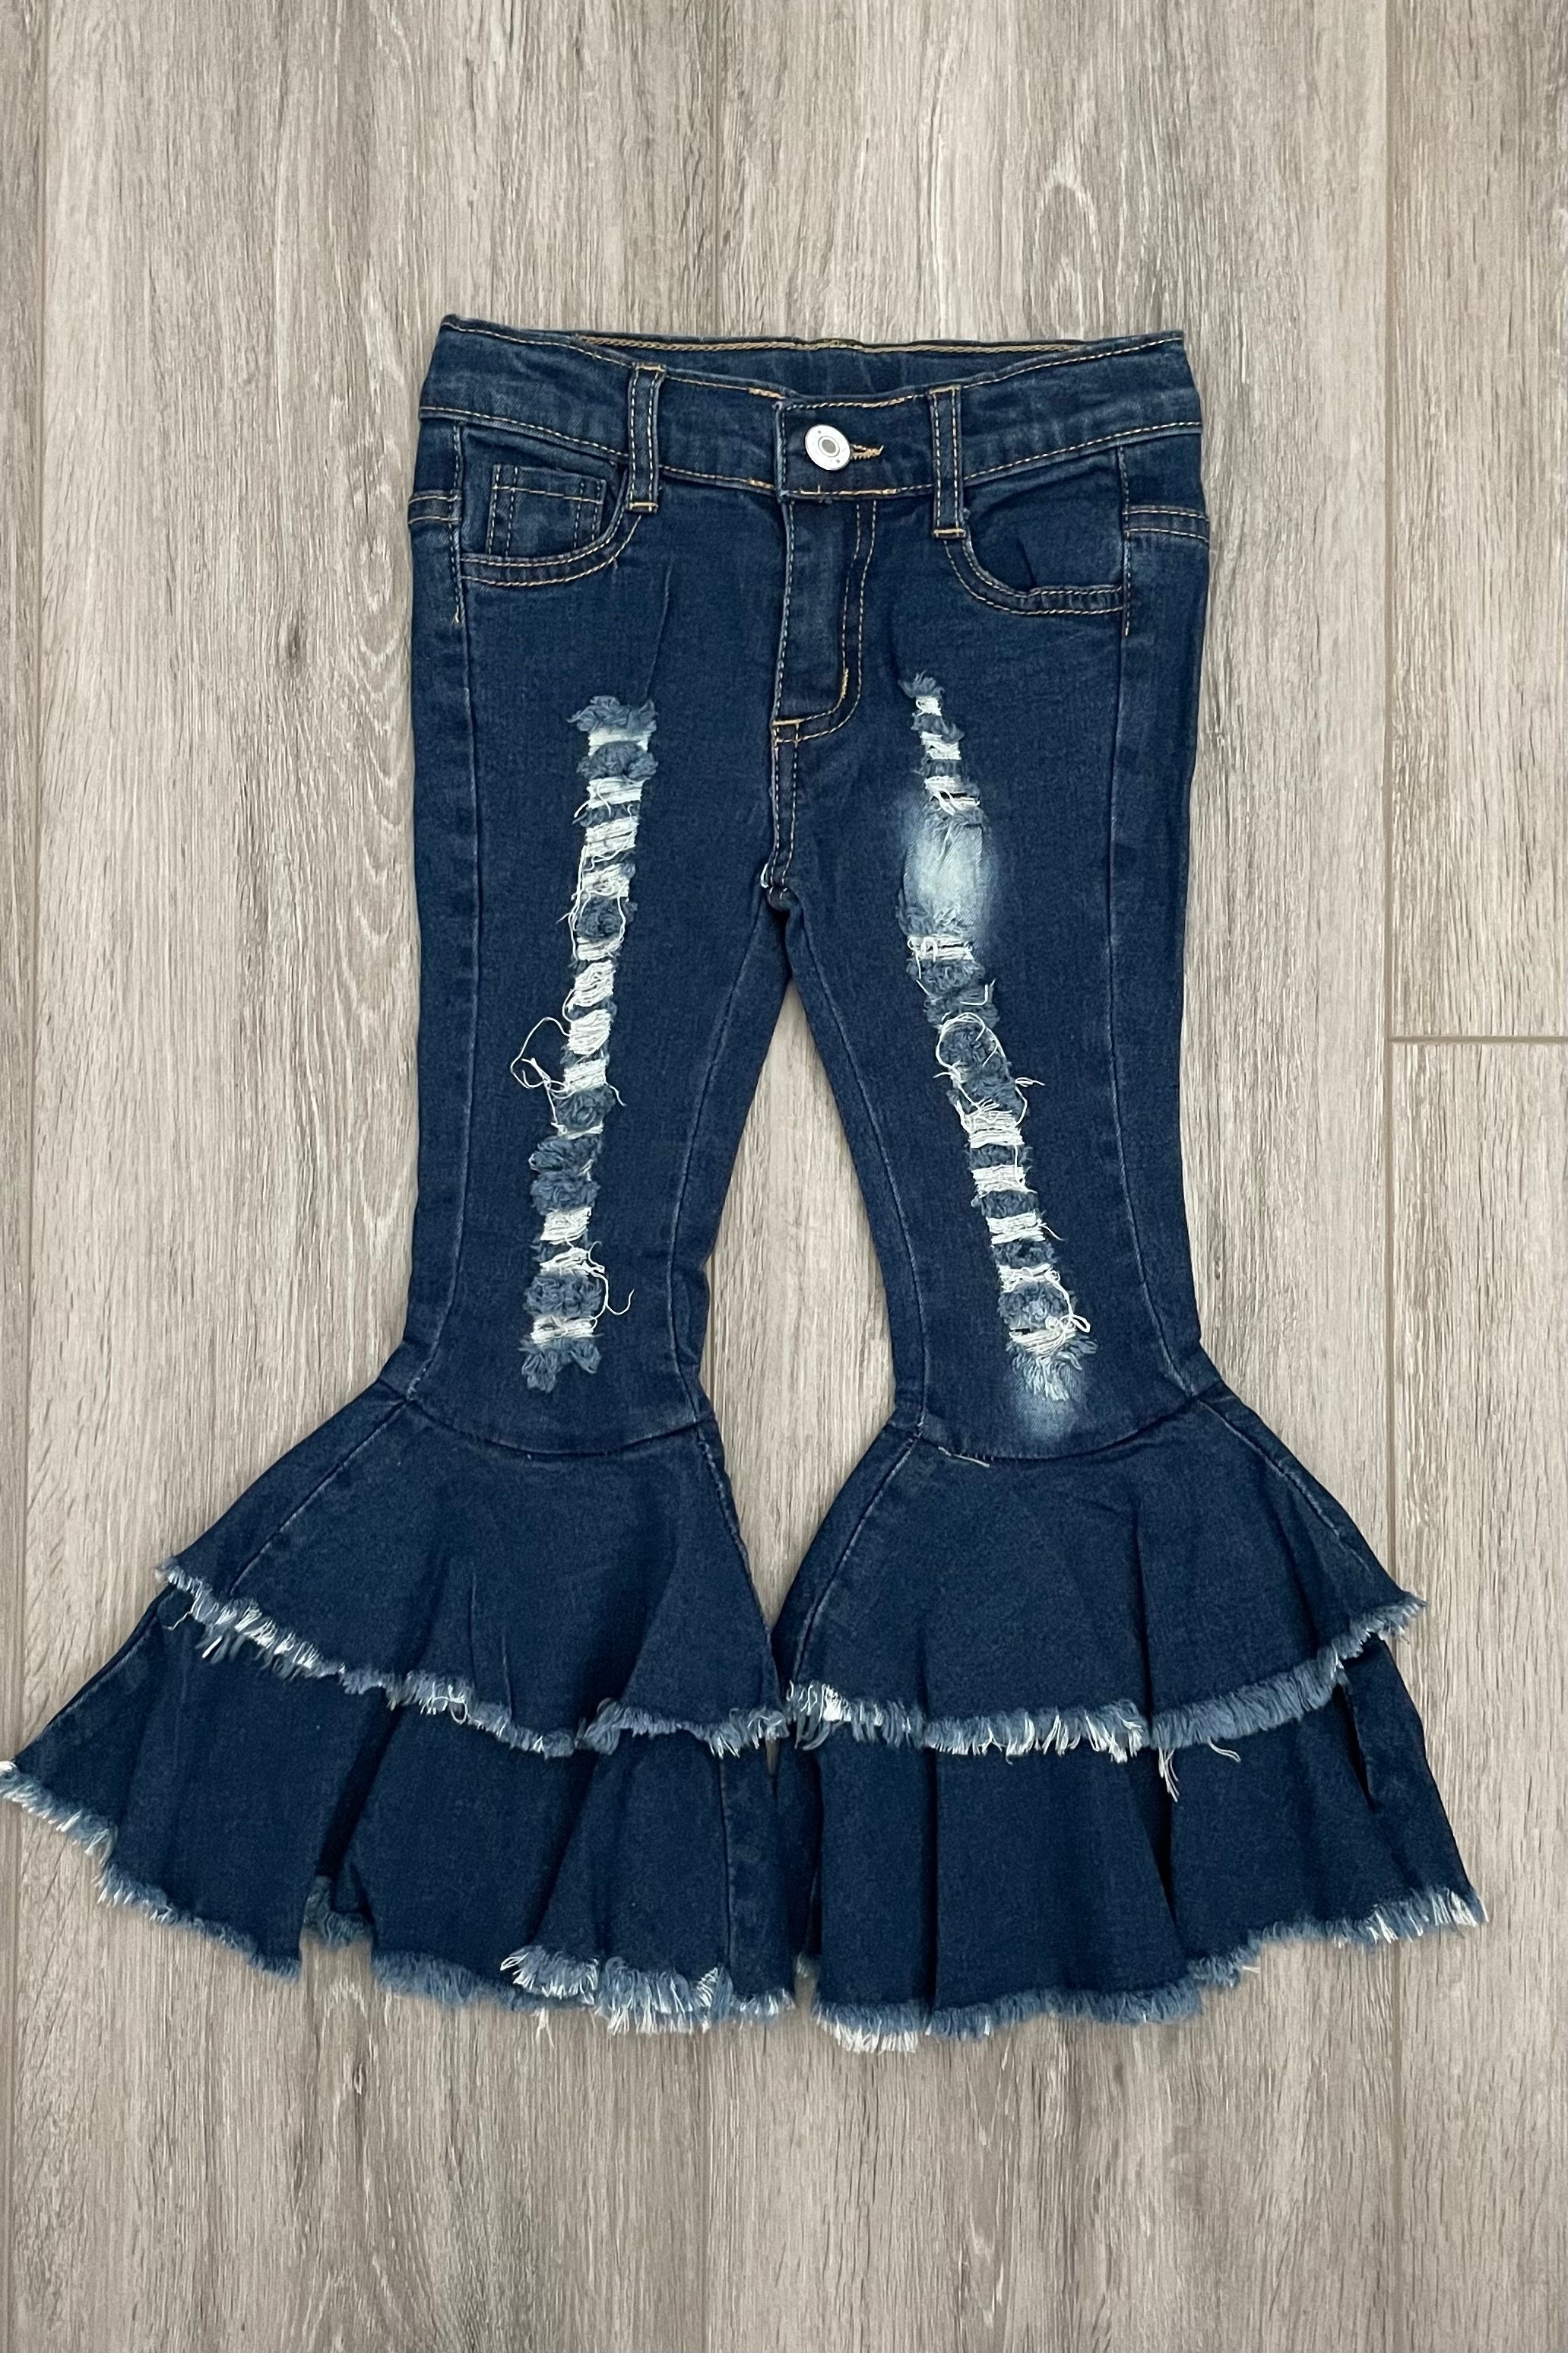 Double Ruffle Fringe Jeans, girls boutique clothing – Rylee Faith